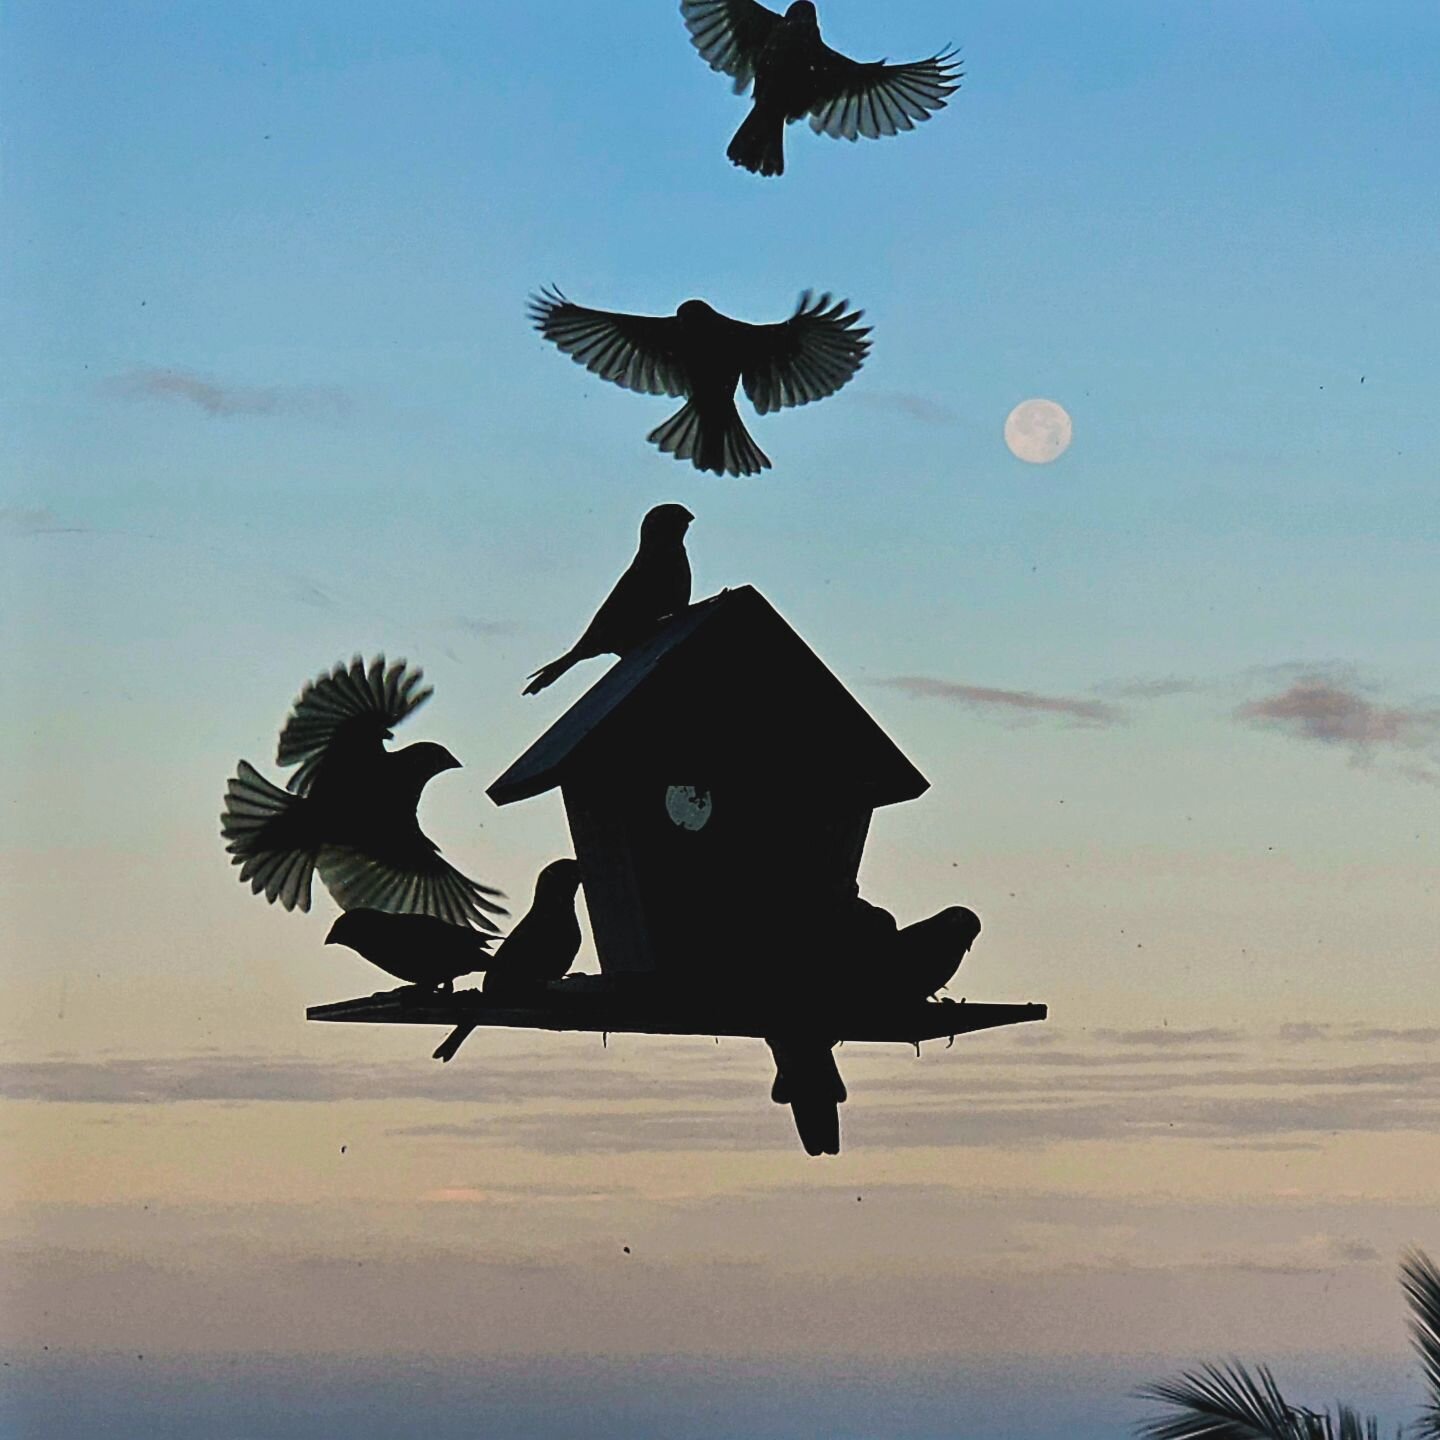 🌕 Much activity under the full moon! #wolf_moon #fullmoon #moonstruck #mooning #🌙 #birding.#birdwatching #birdlovers #birds_adored #pacificbirds #birdfeeder #sunrise #moonset ##sillouette #oceanview #skycolors #sky #skyphotography #skyview #wings #